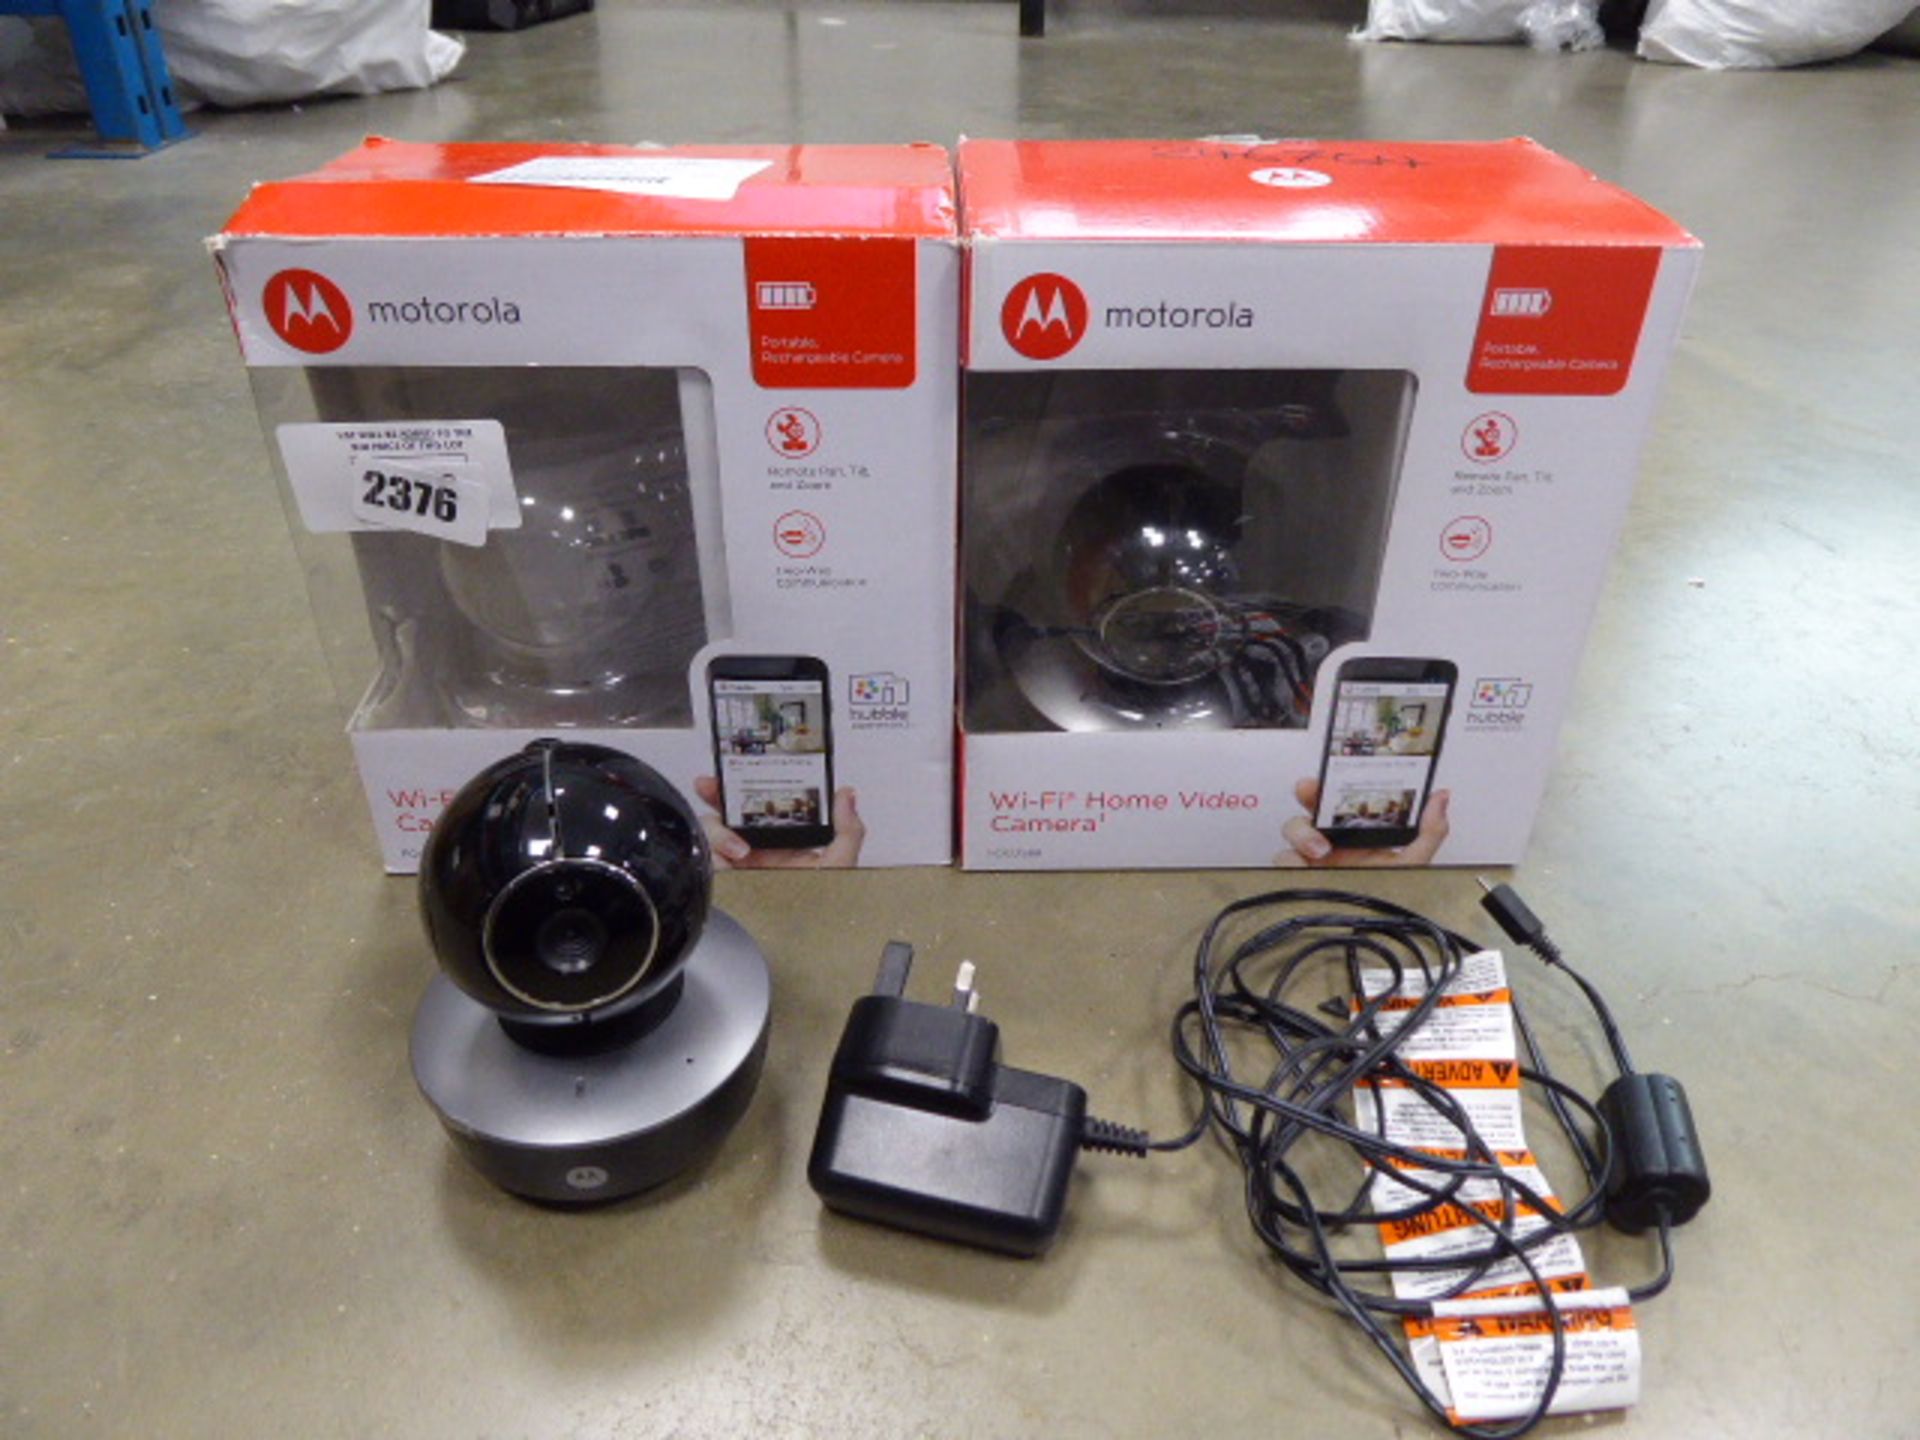 2366 - 2 Motorola Home Video wi-fi cameras model FOCUS88 in boxes